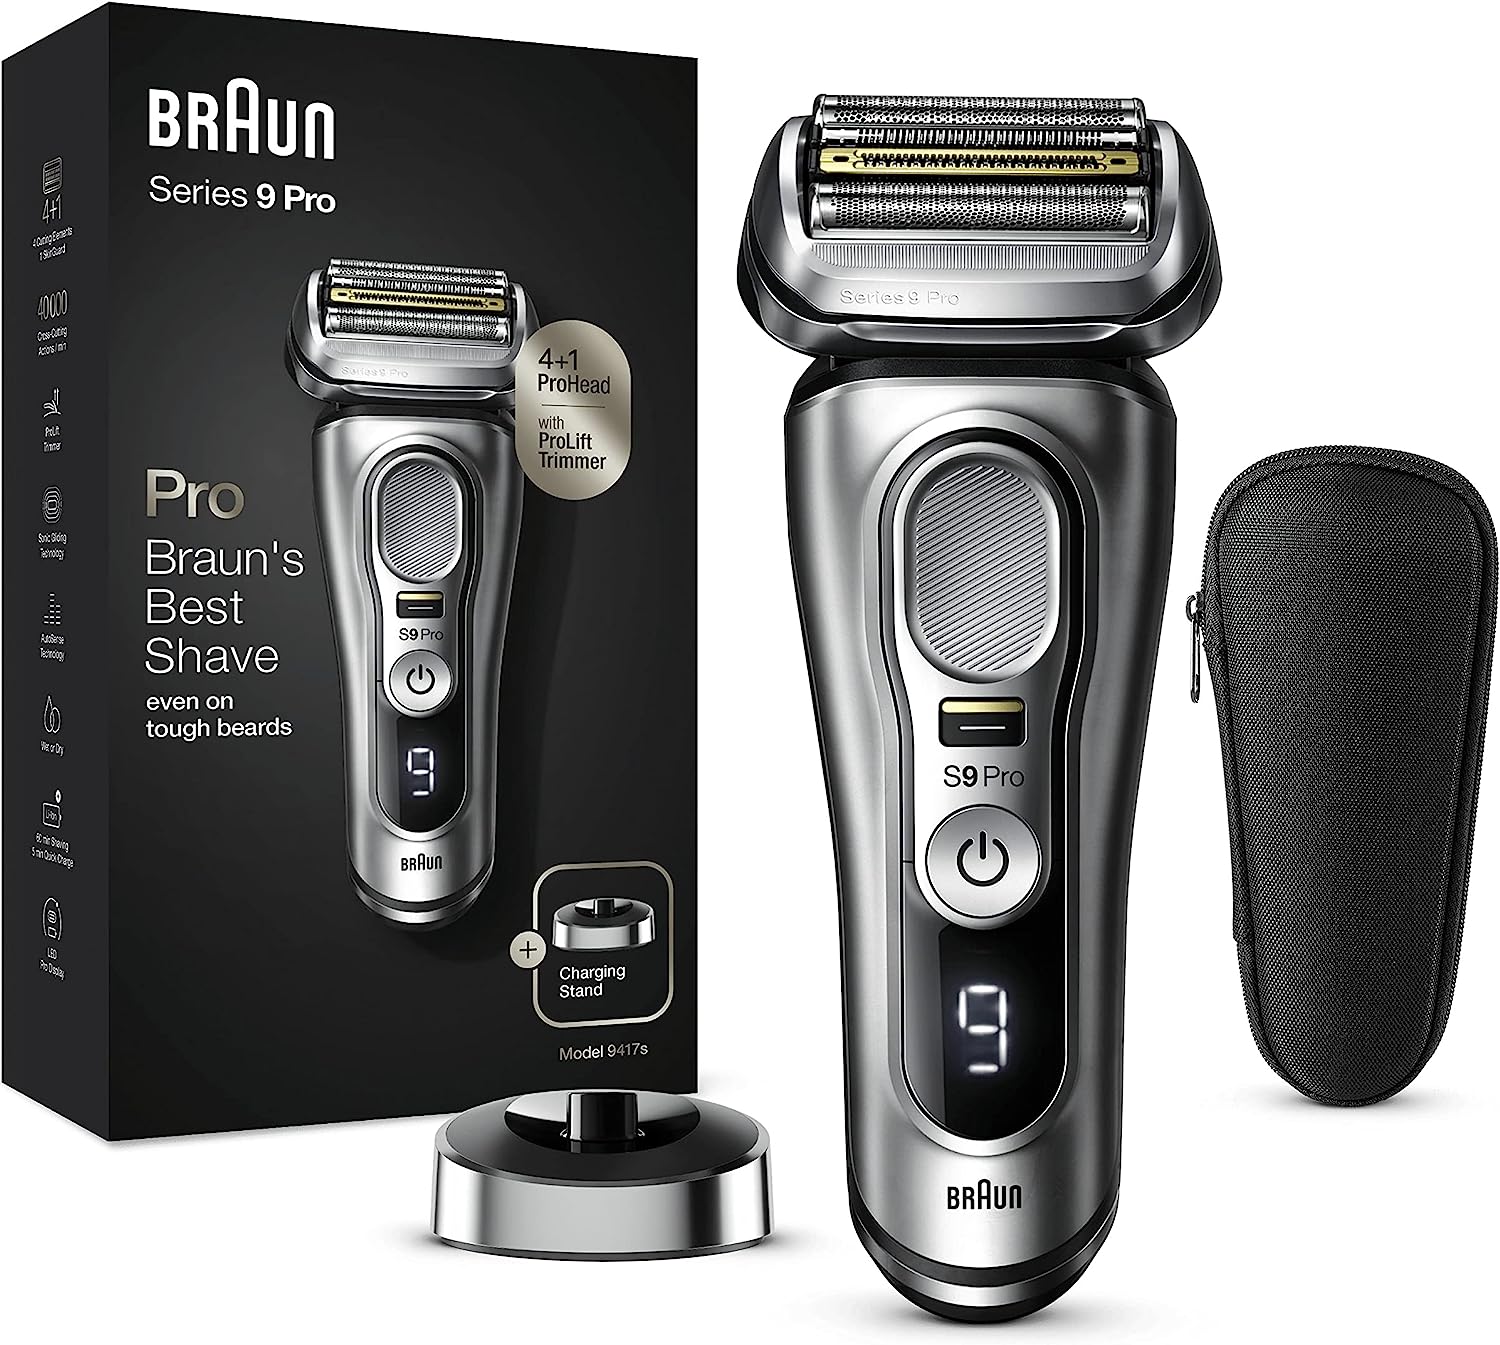 Braun Series 9 Pro+ vs Philips Shaver Series 9000 vs Panasonic Arc 6